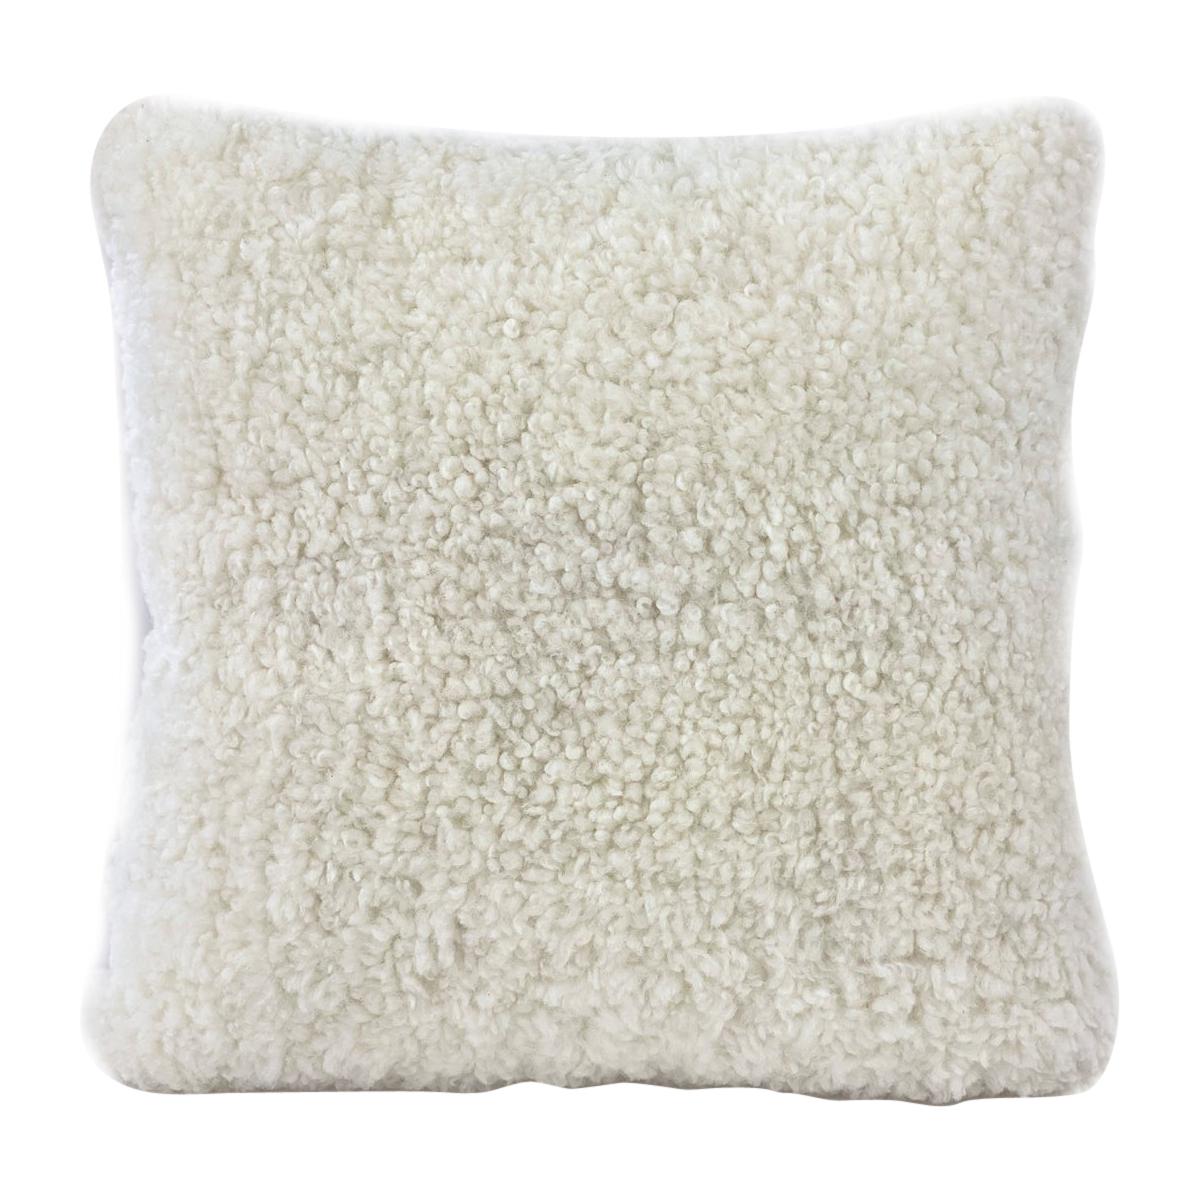 Shearling-Kissen, weißes Schafsfell, quadratisch, 18x18 Zoll  40 x 40 cm  im Angebot